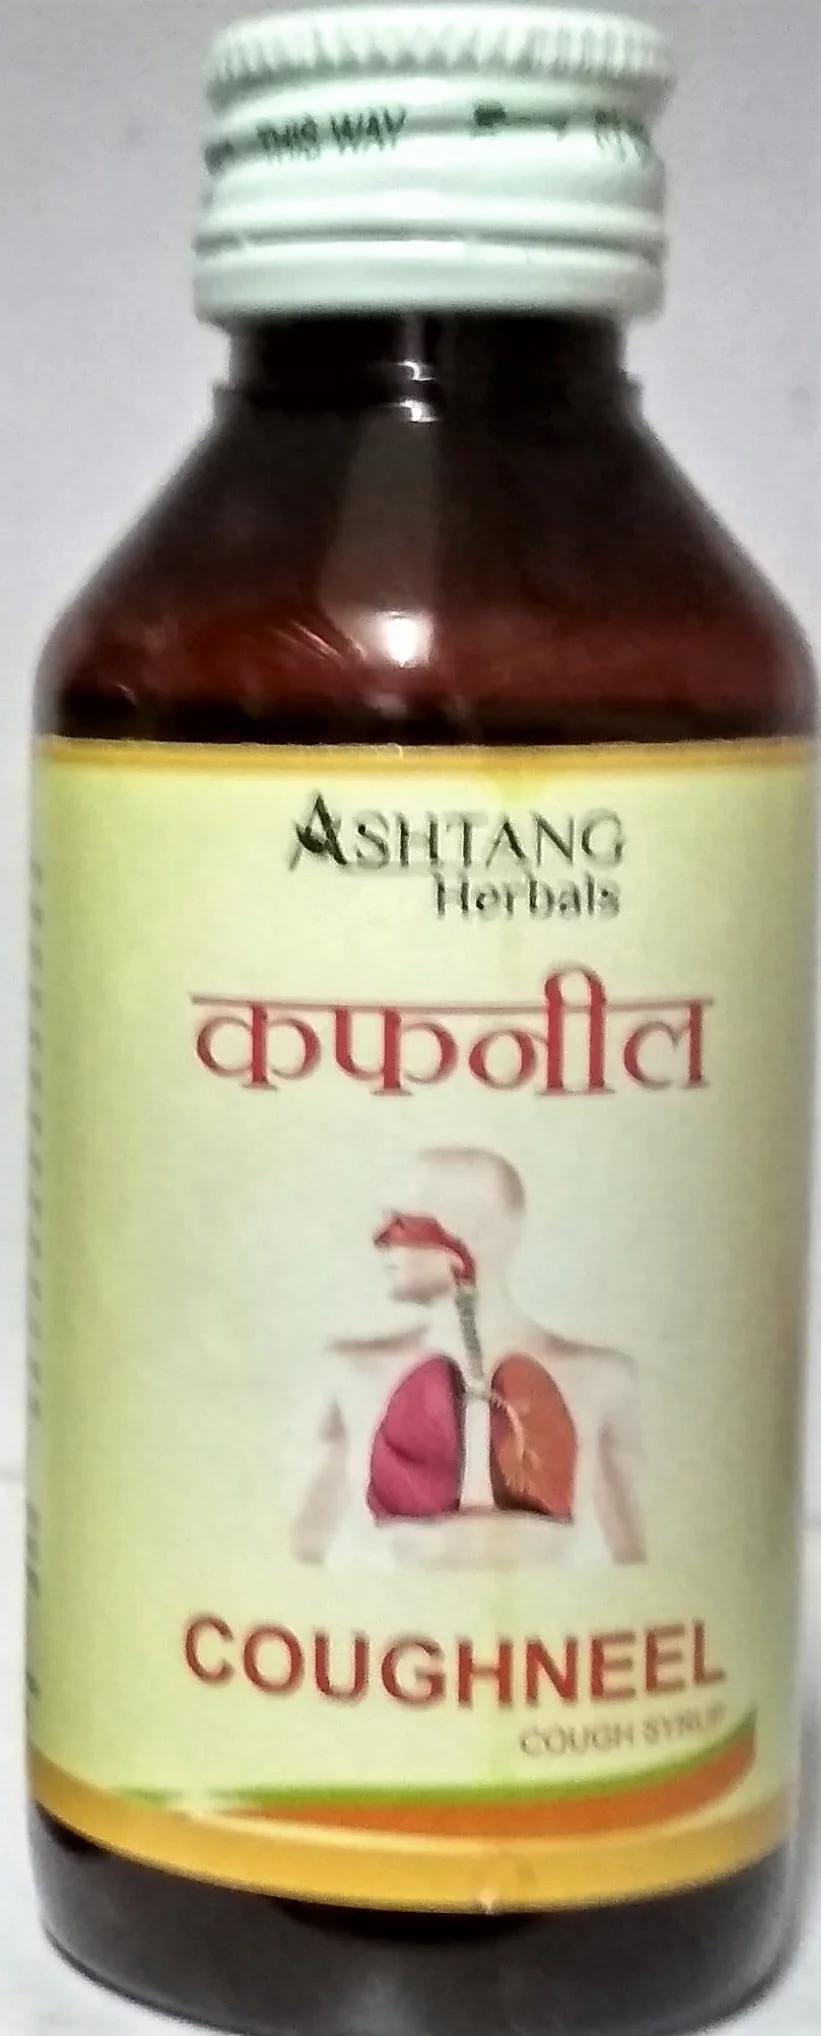 coughneel syrup 100ml ashtang health care